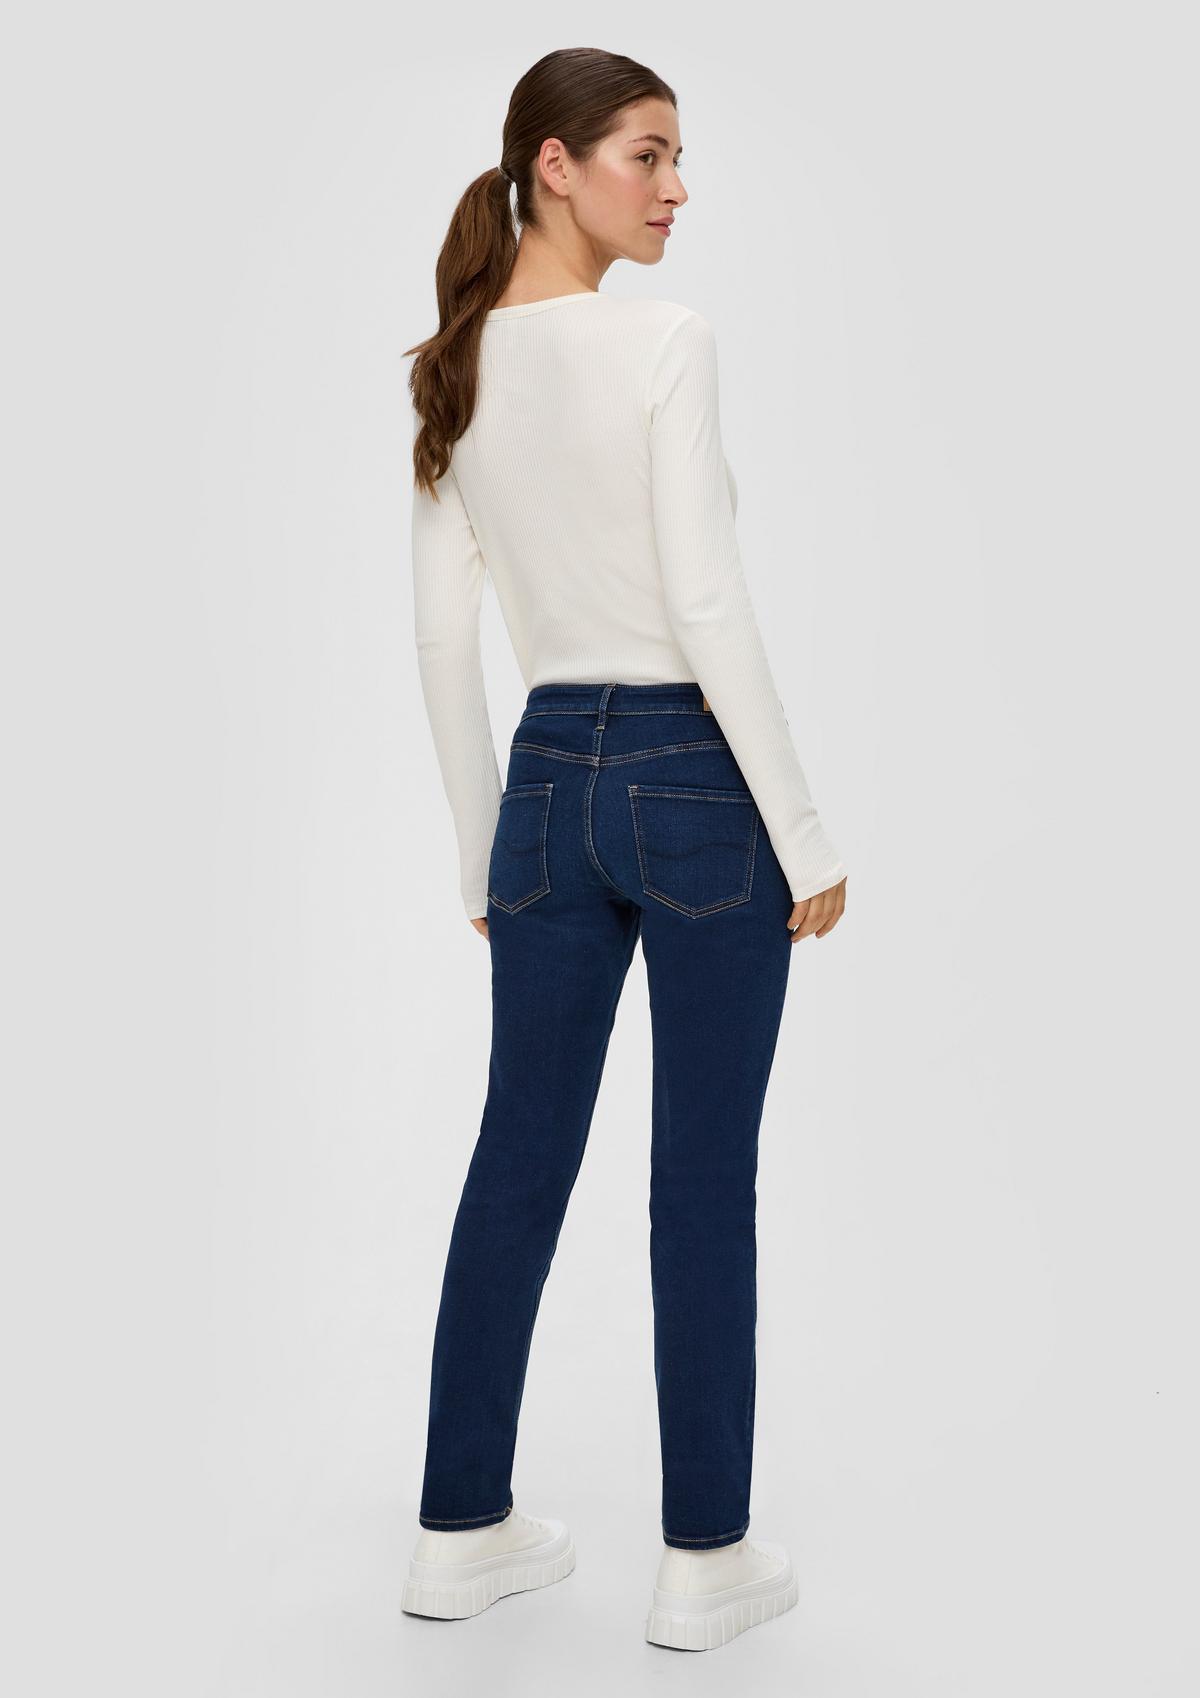 s.Oliver Catie jeans / slim fit / mid rise / slim leg / super stretch